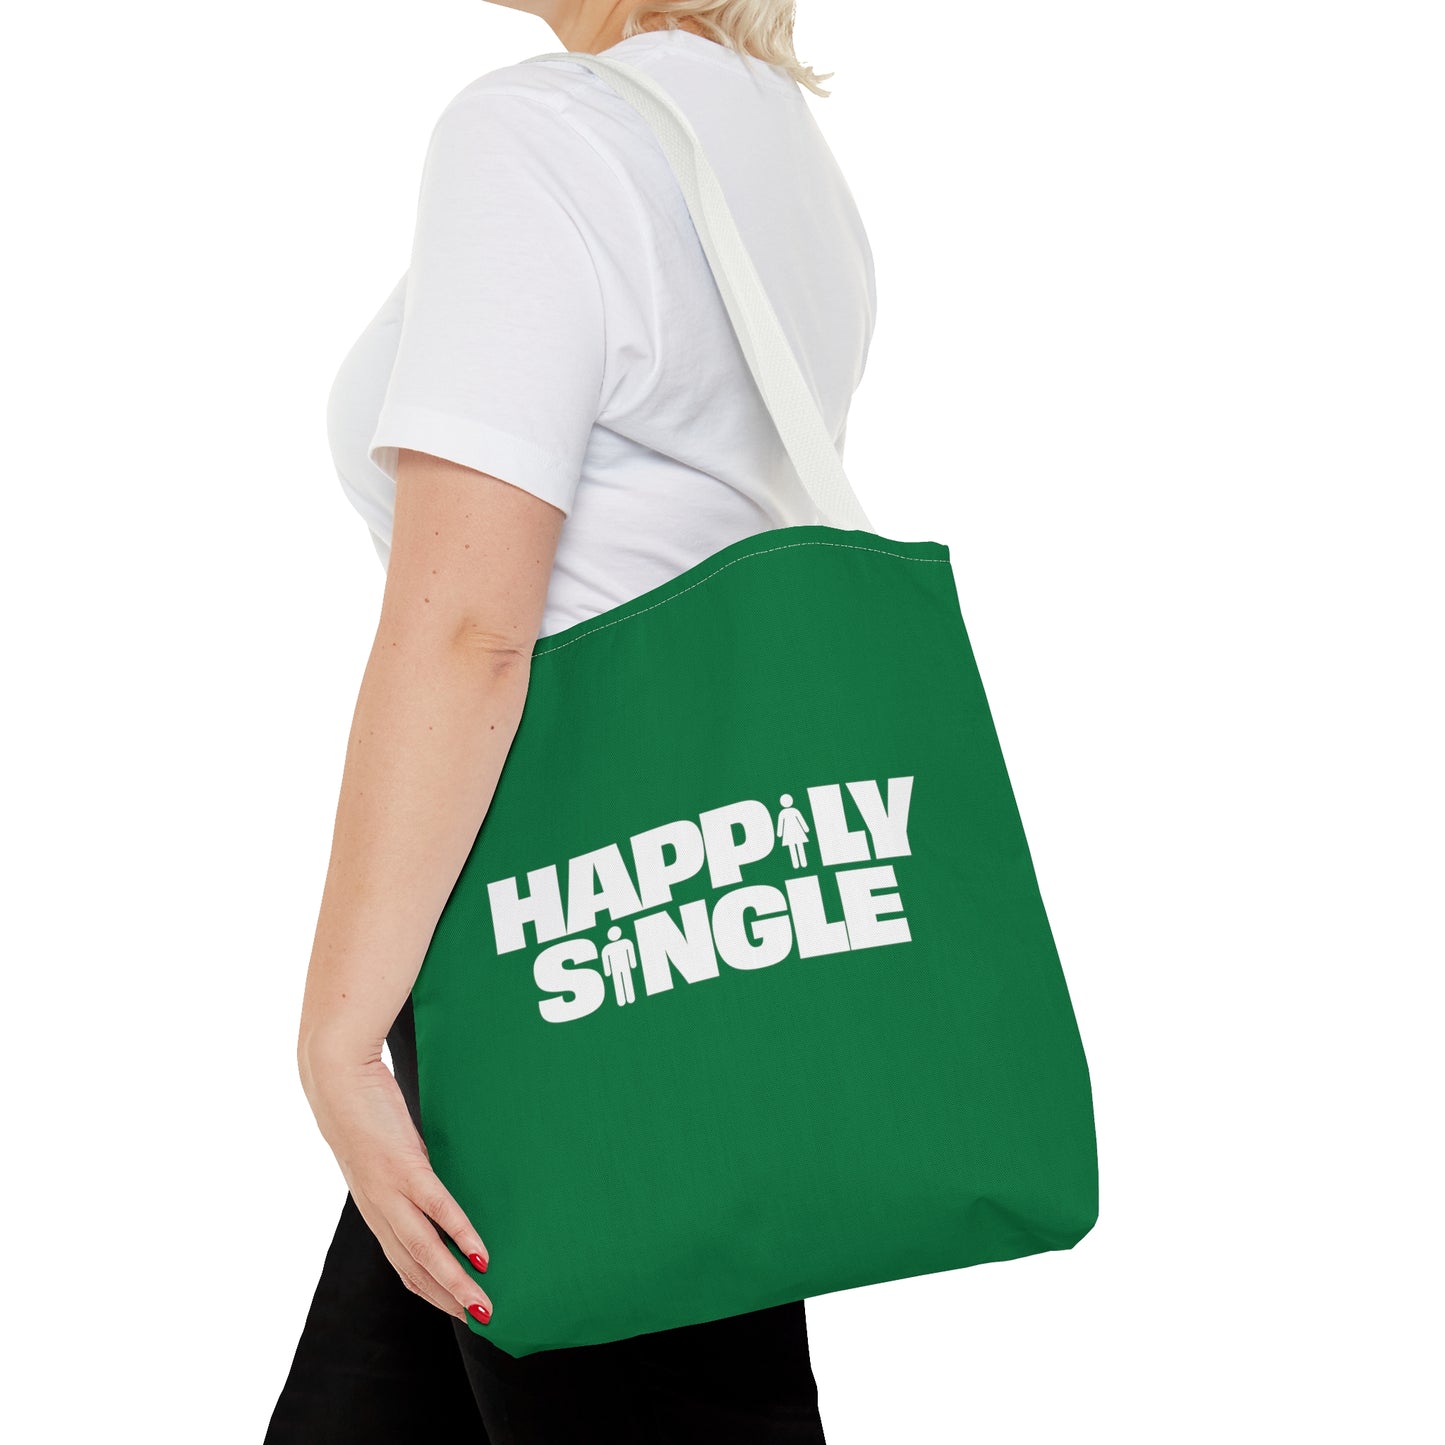 Happily Single Tote Bag